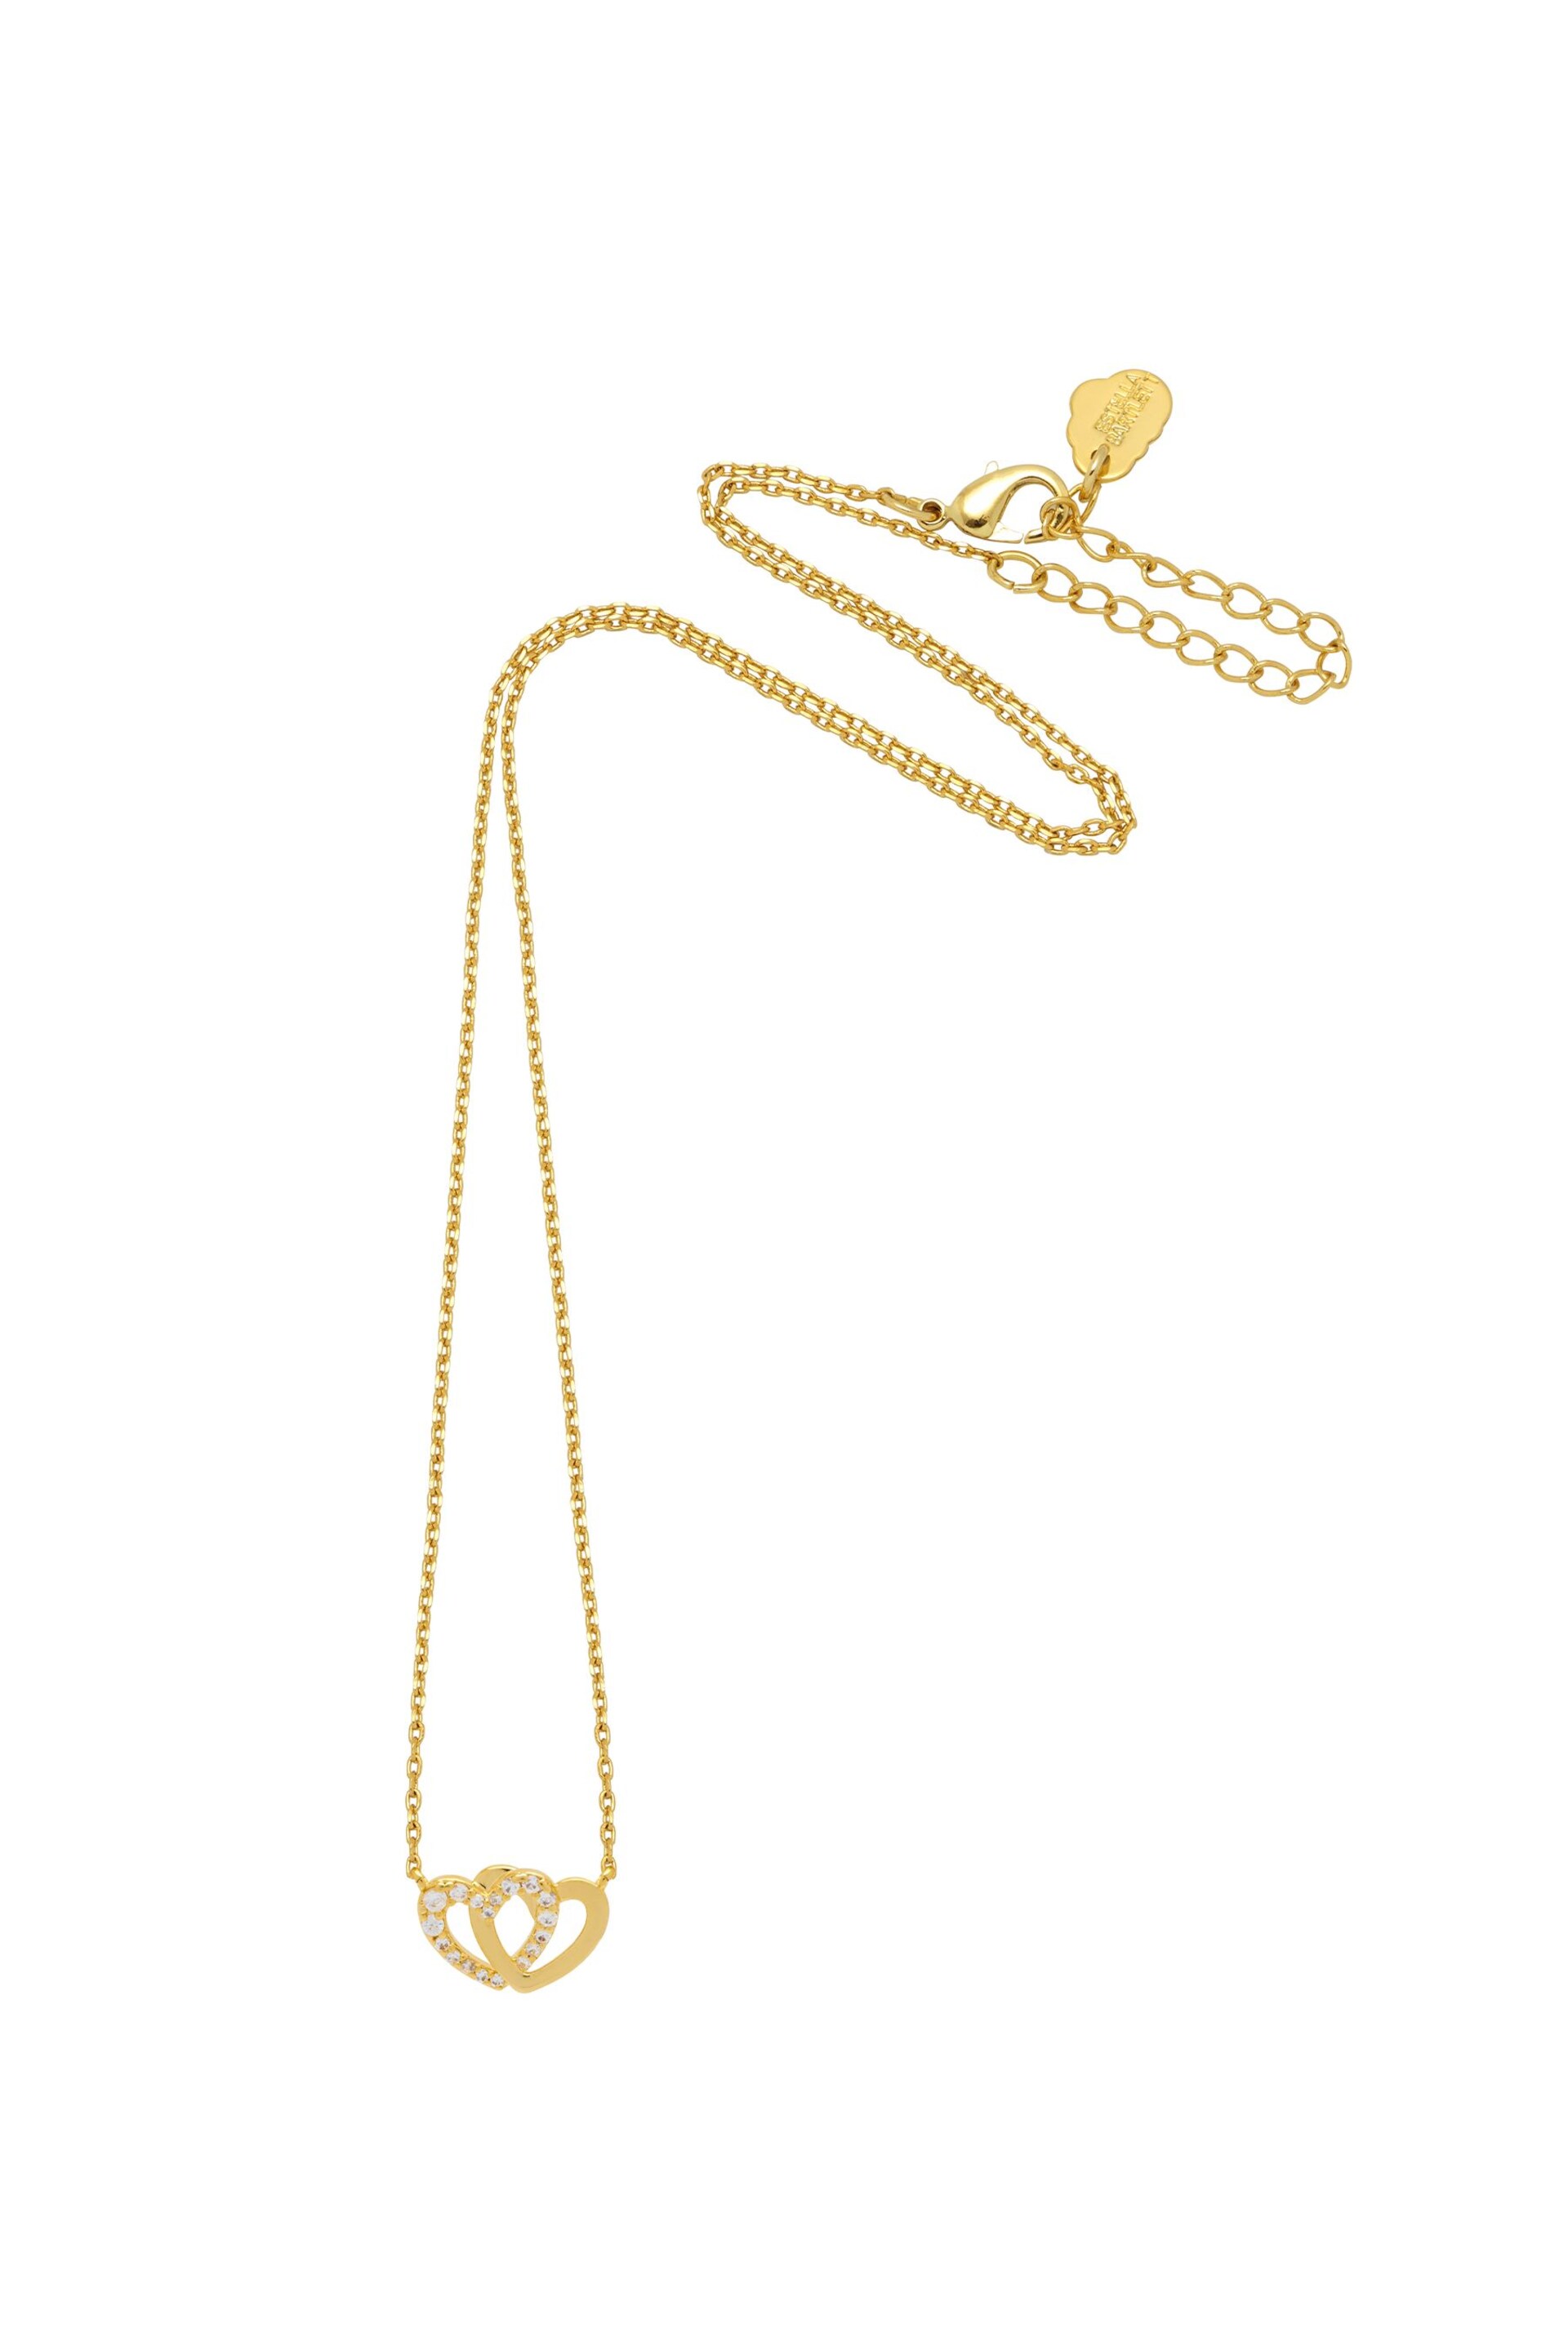 Estella Bartlett Gold Cubic Zirconia Interlocking Heart Necklace - Image 1 of 4